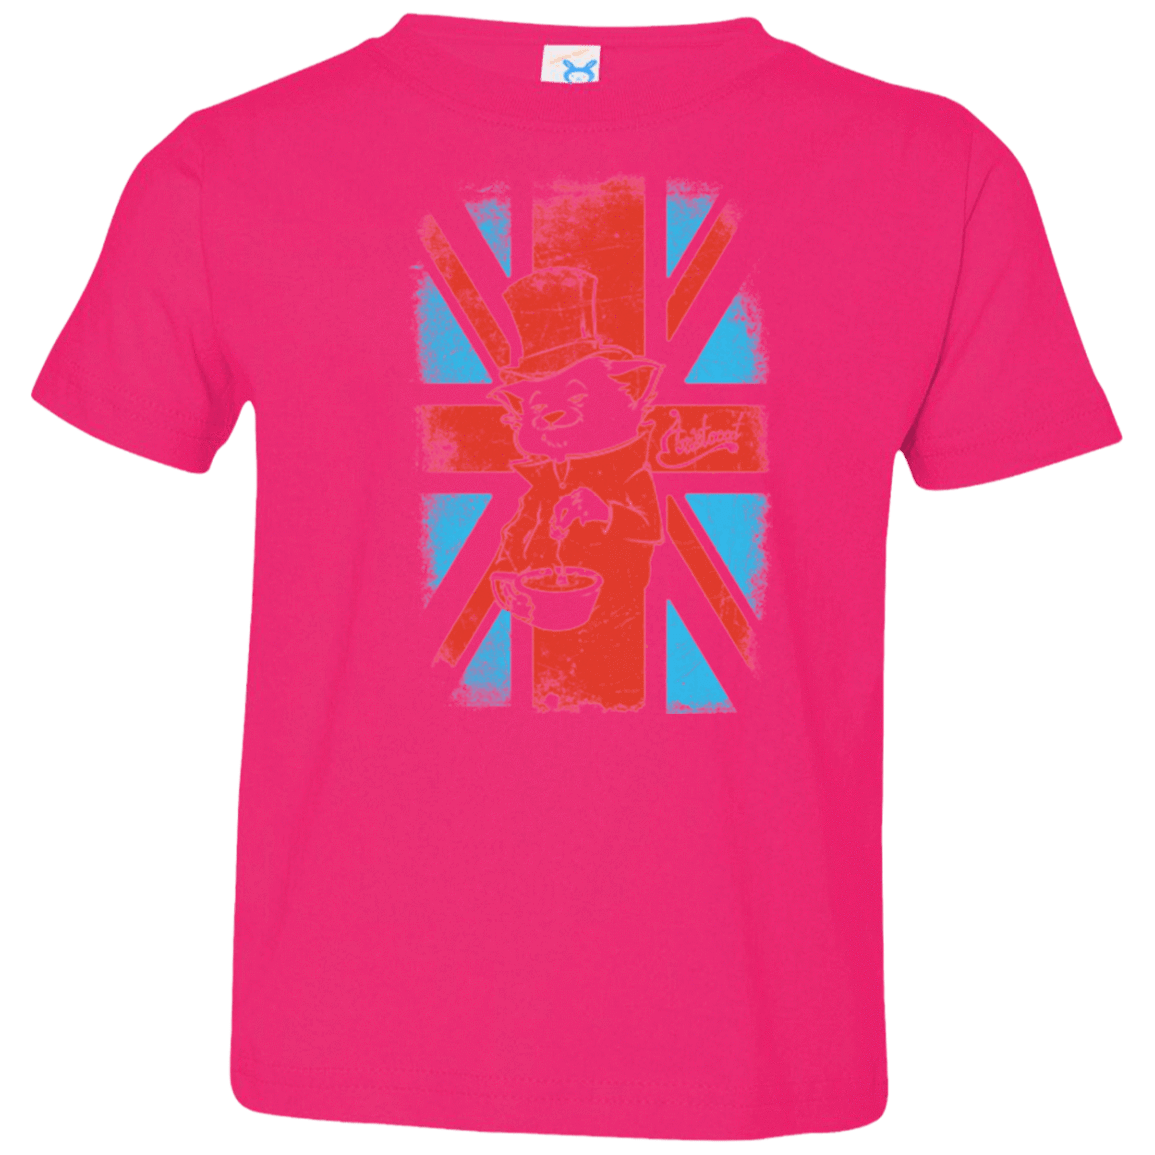 T-Shirts Hot Pink / 2T Aristocat Toddler Premium T-Shirt